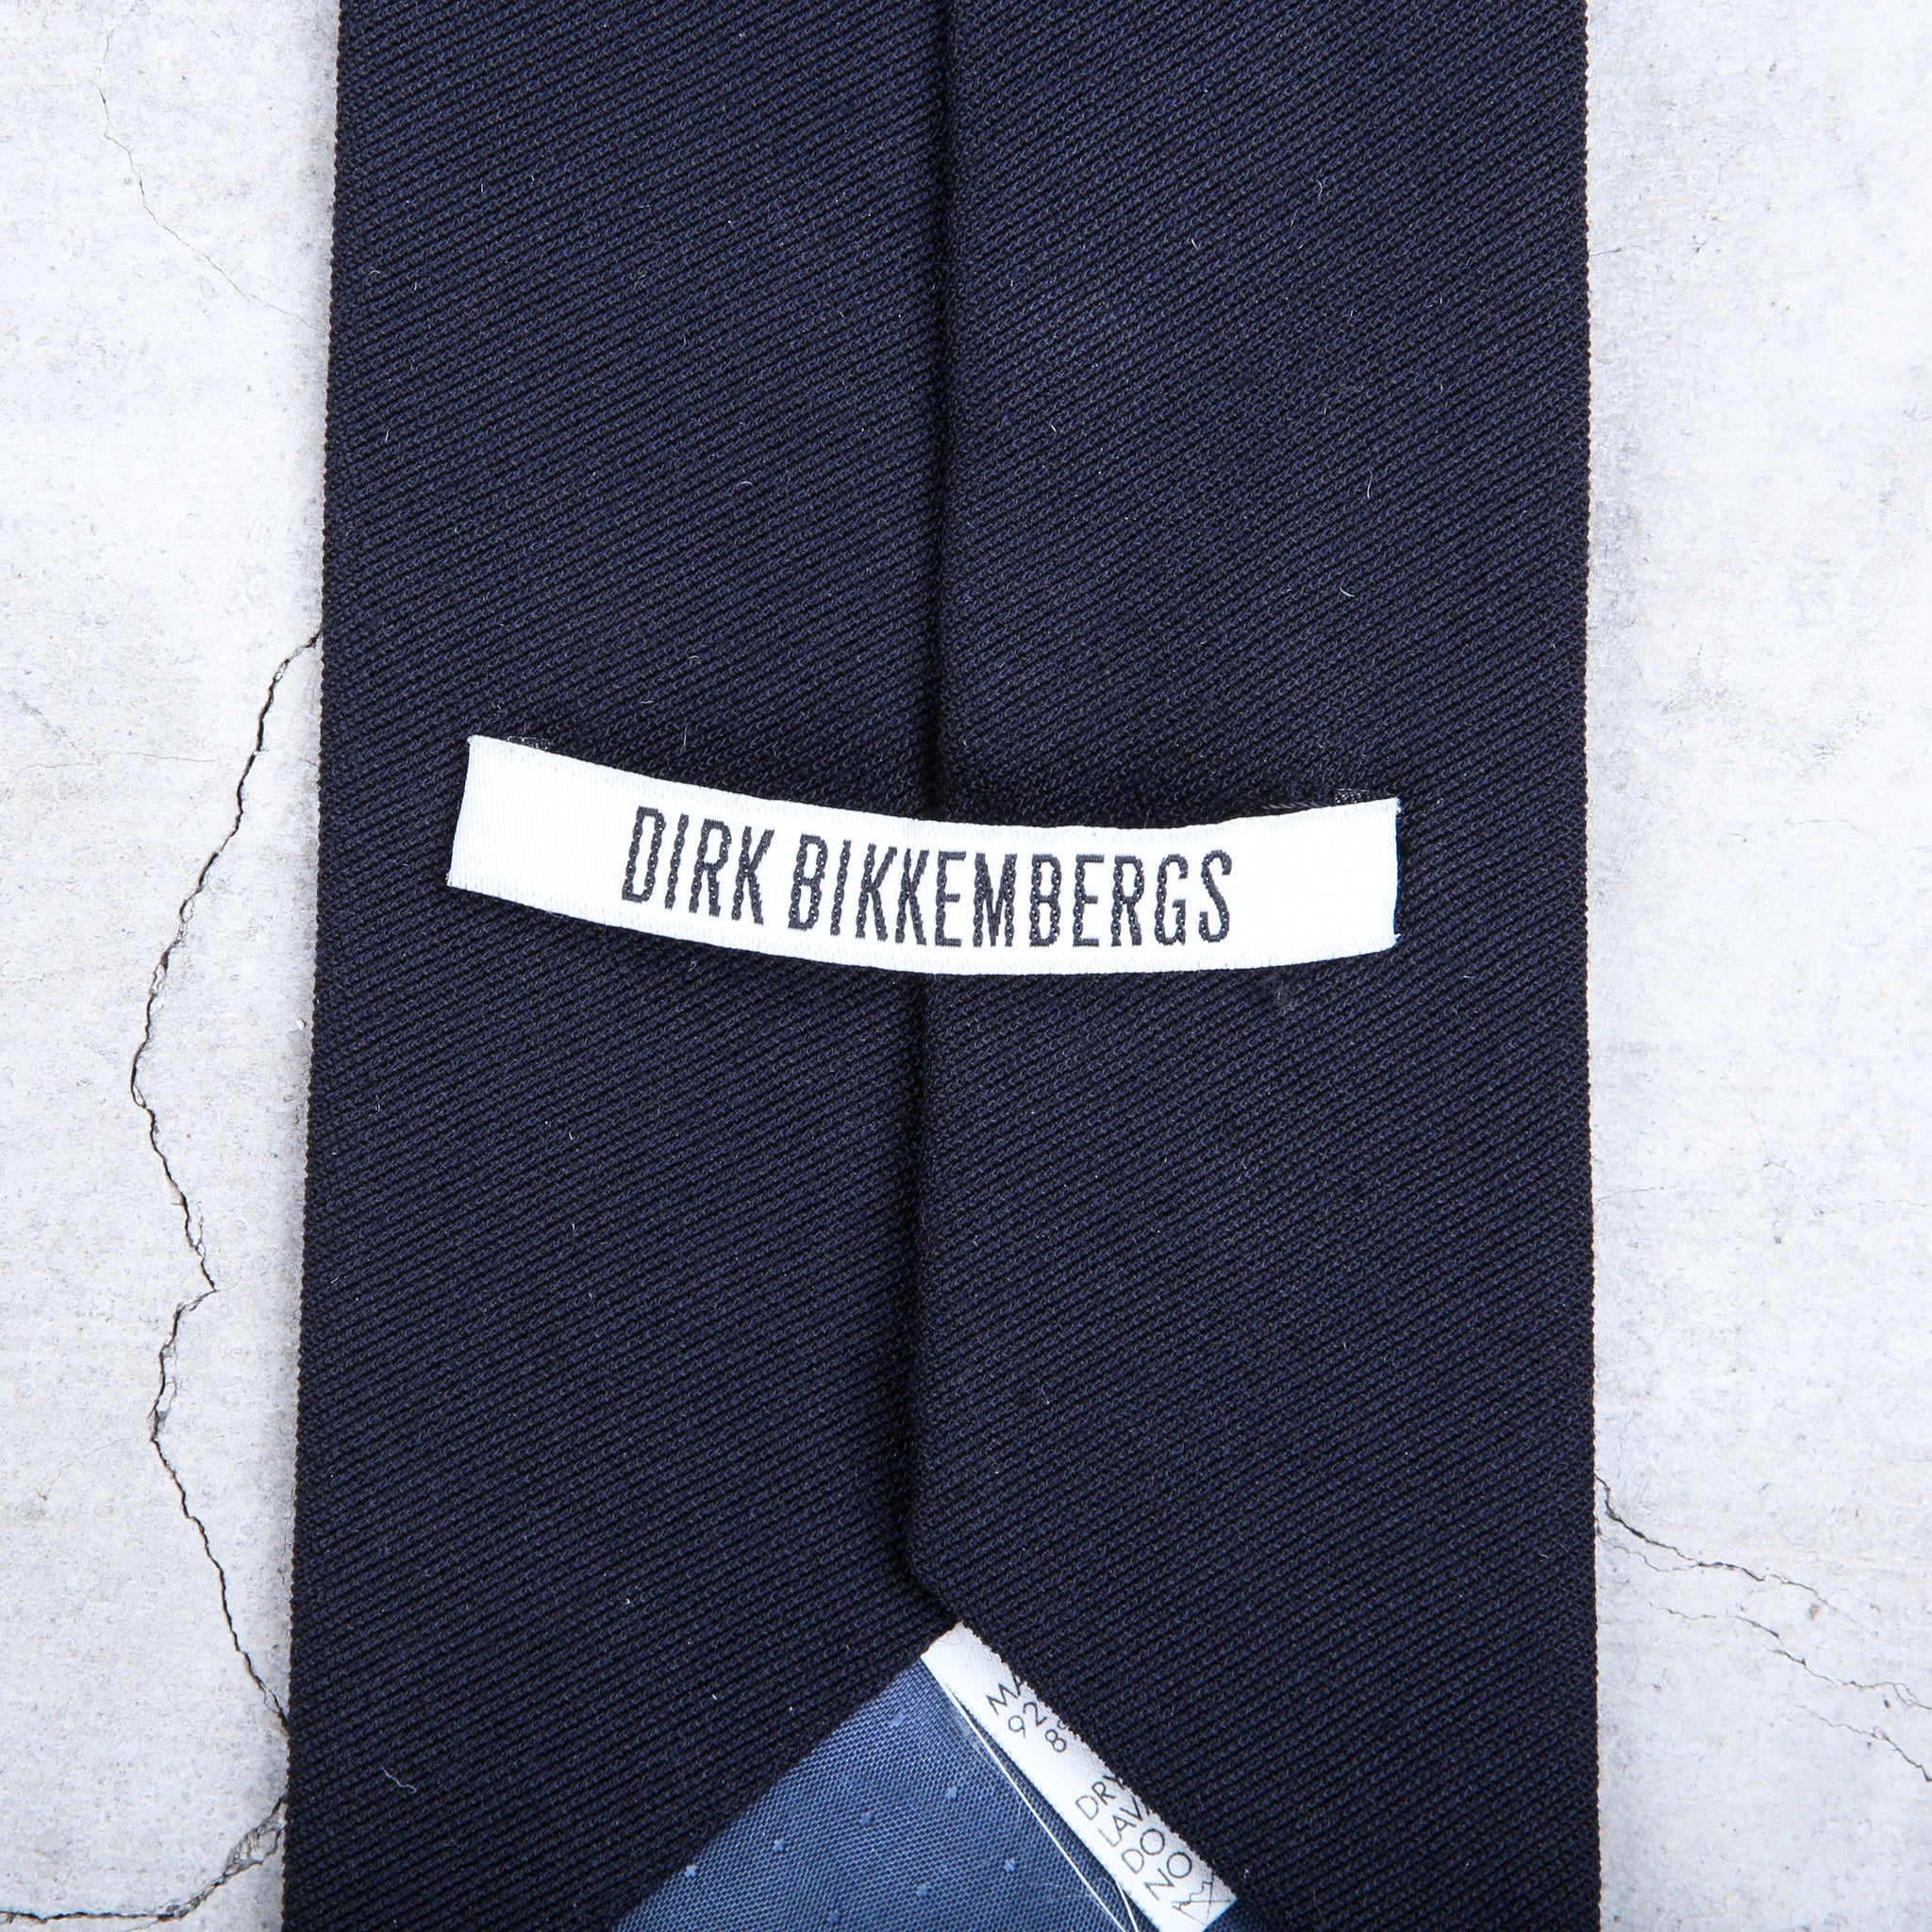 Dirk Bikkembergs Metal Tie Holder Chain